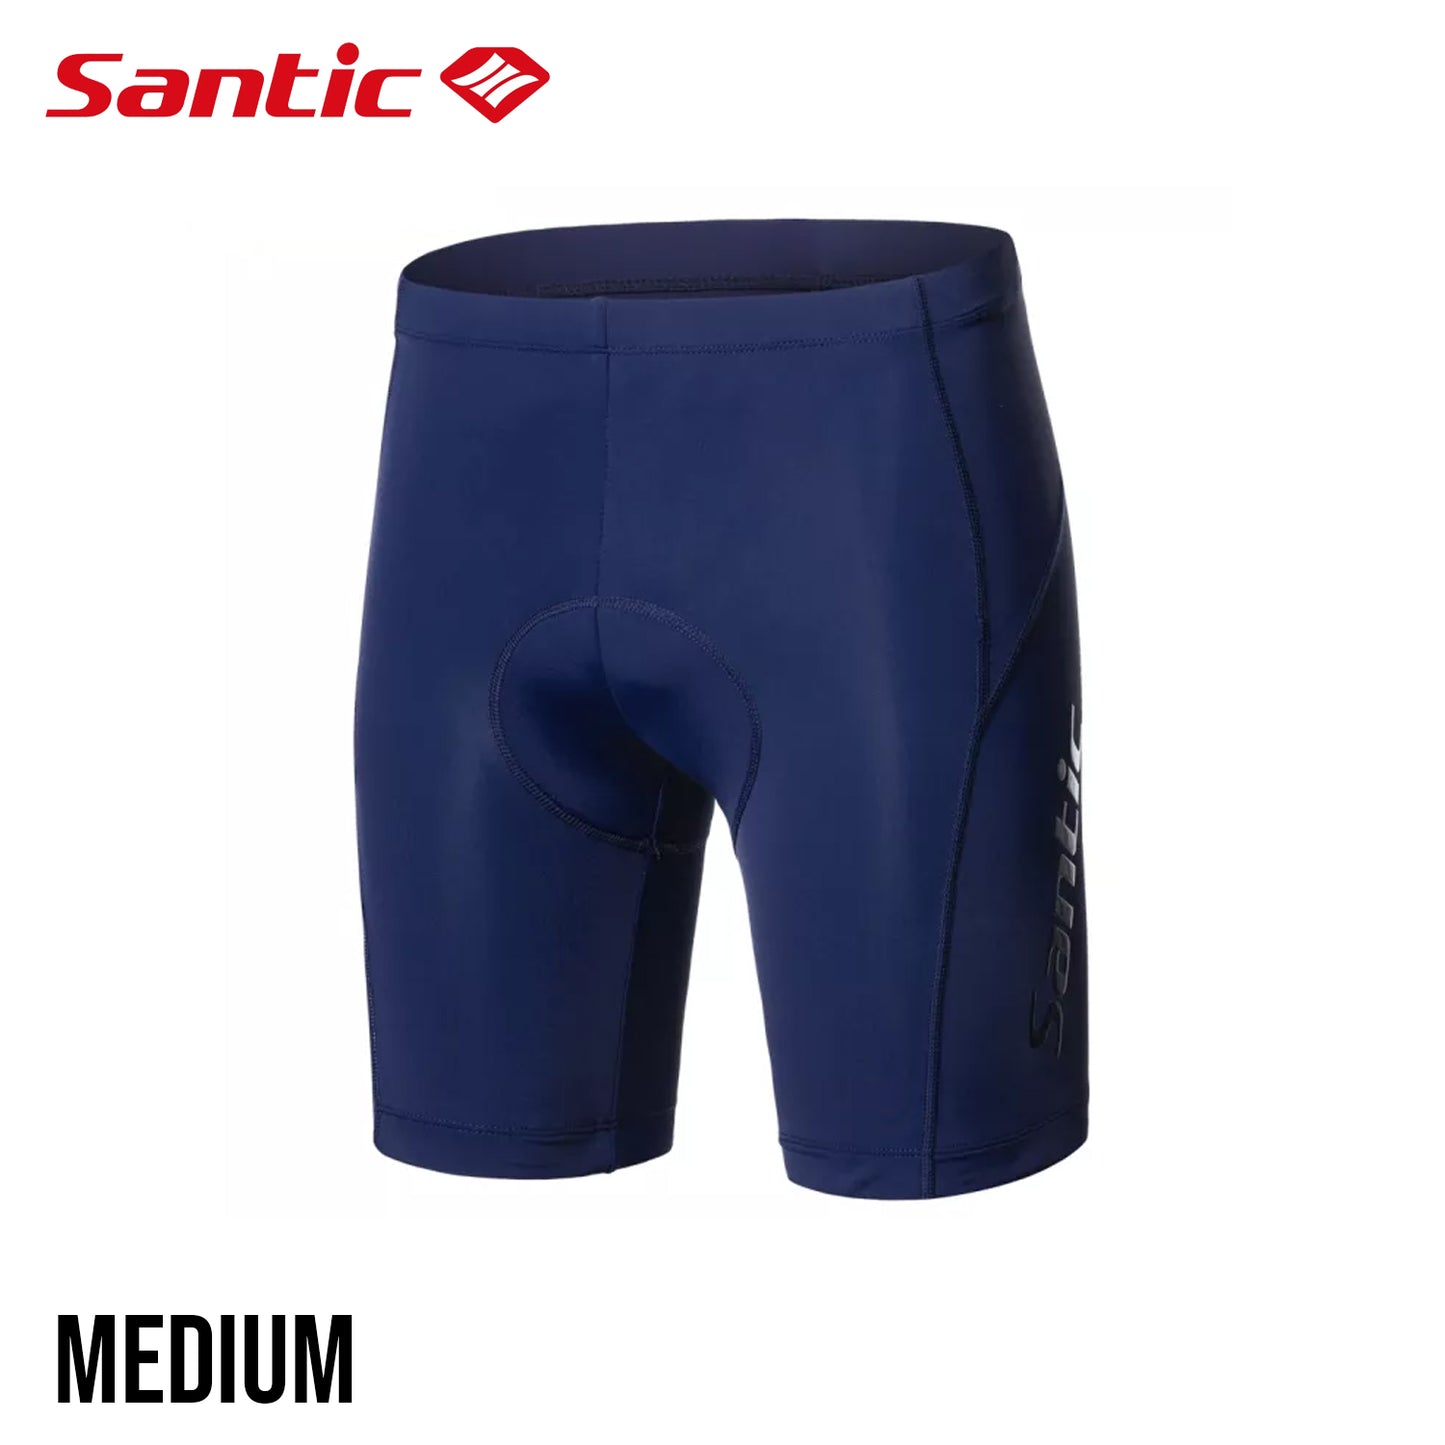 Santic Cayenne Men's Spring Summer Cycling Shorts - Black